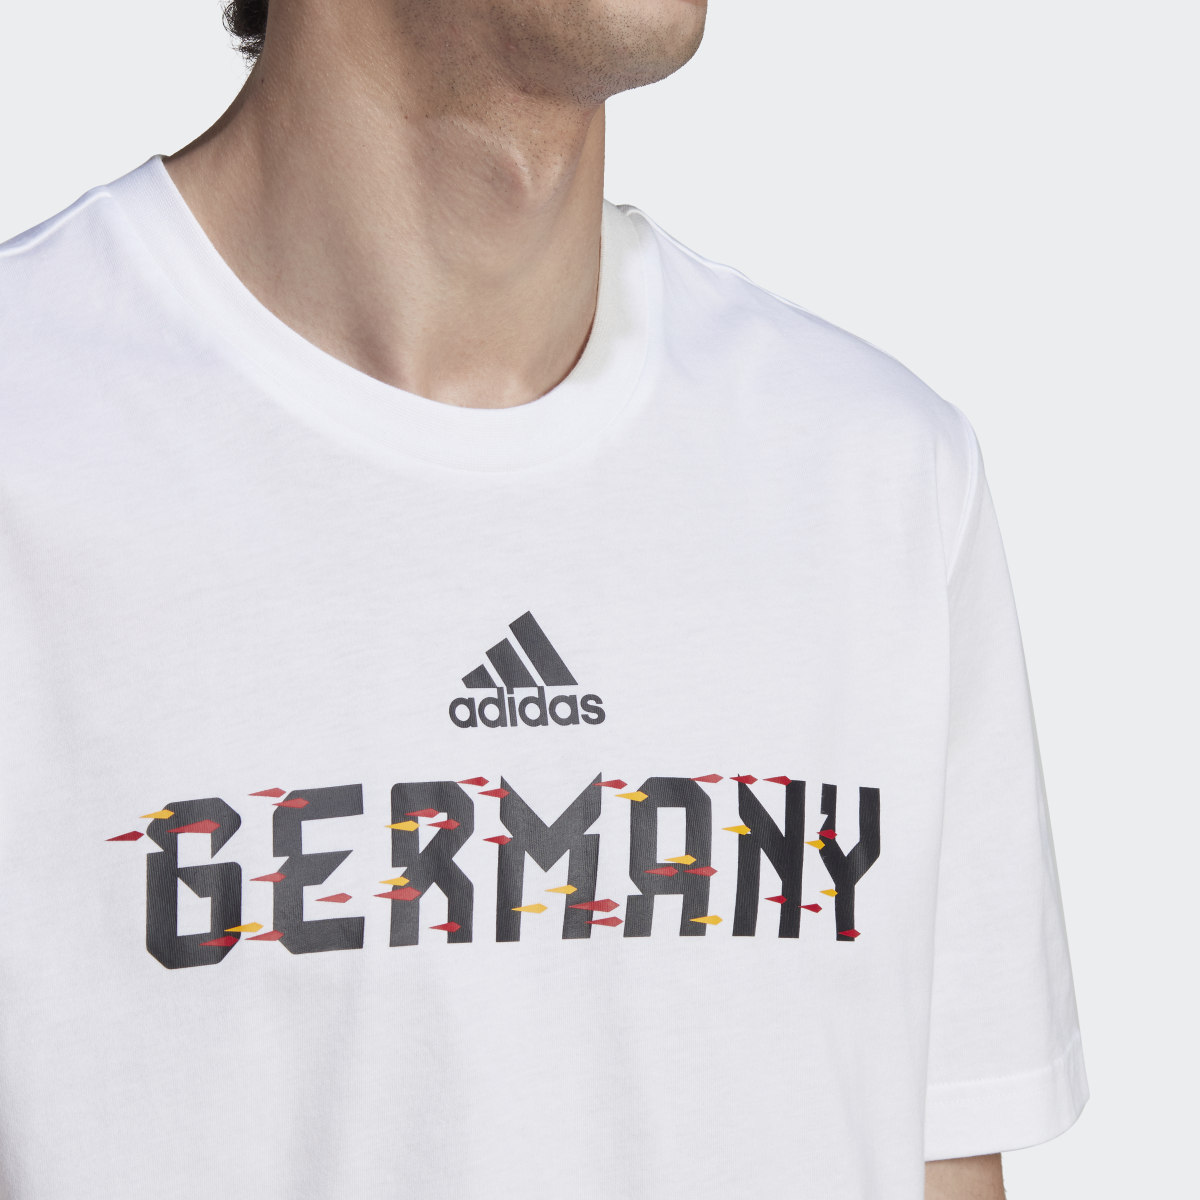 Adidas FIFA World Cup 2022™ Germany T-Shirt. 6